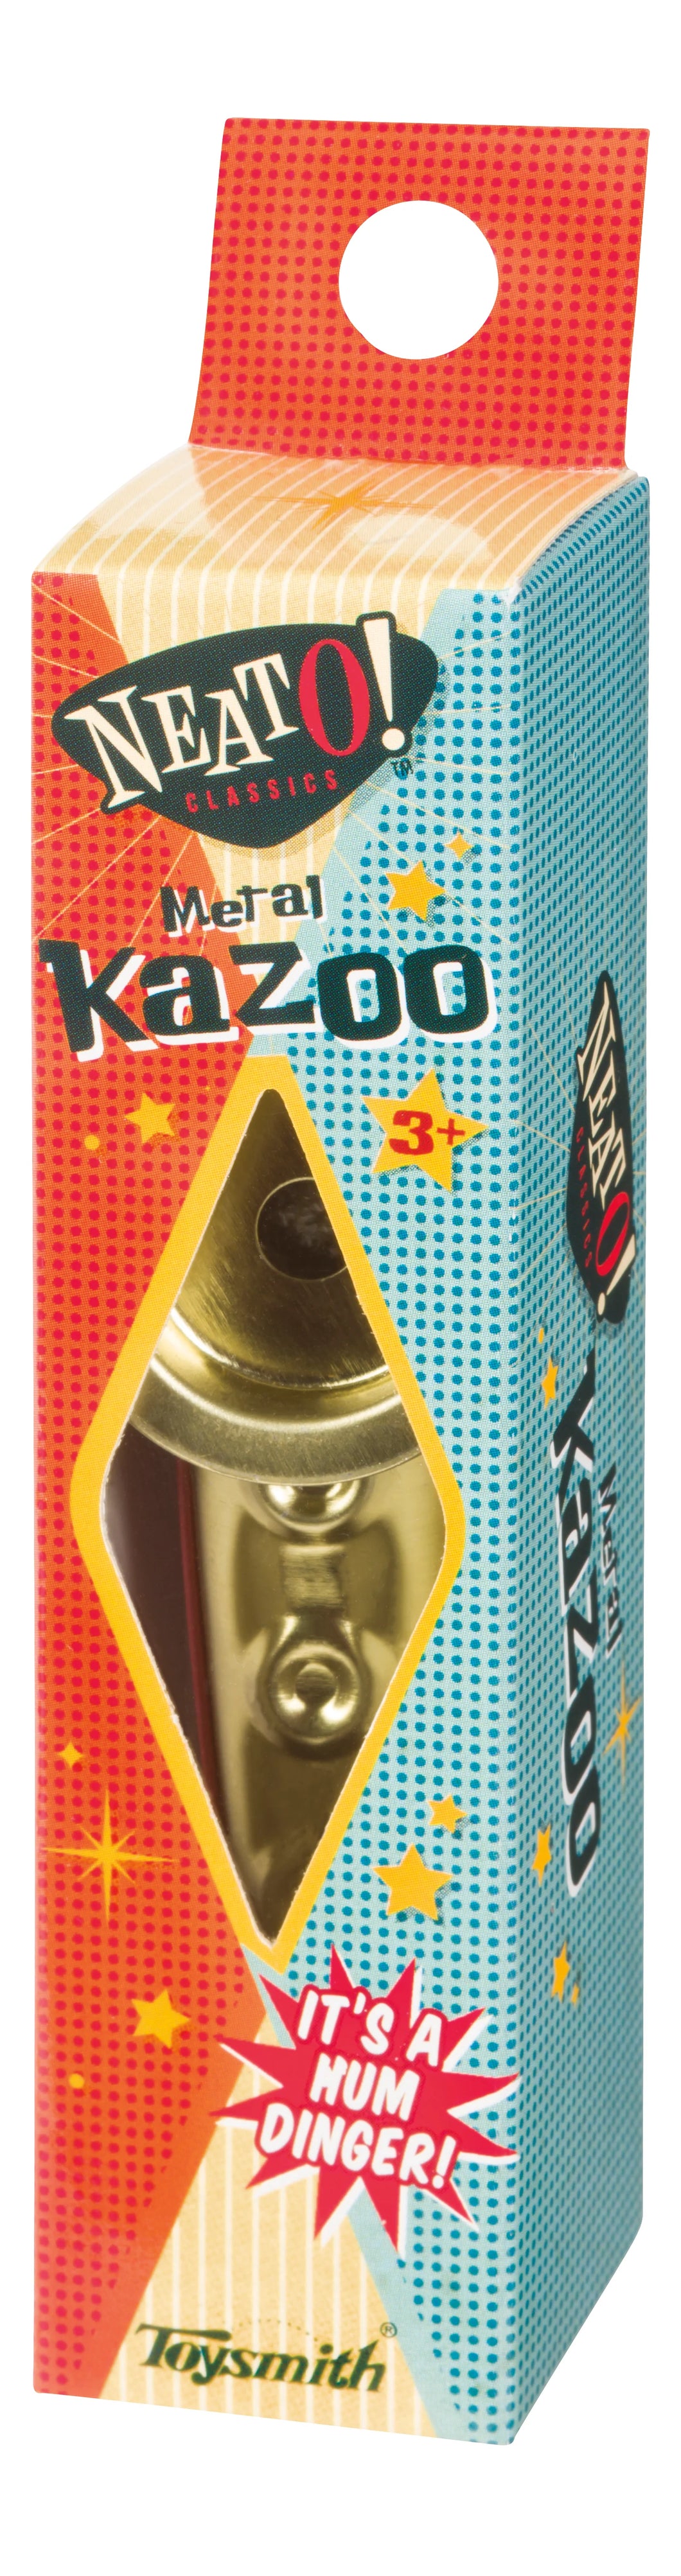 Metal Kazoo Boxed